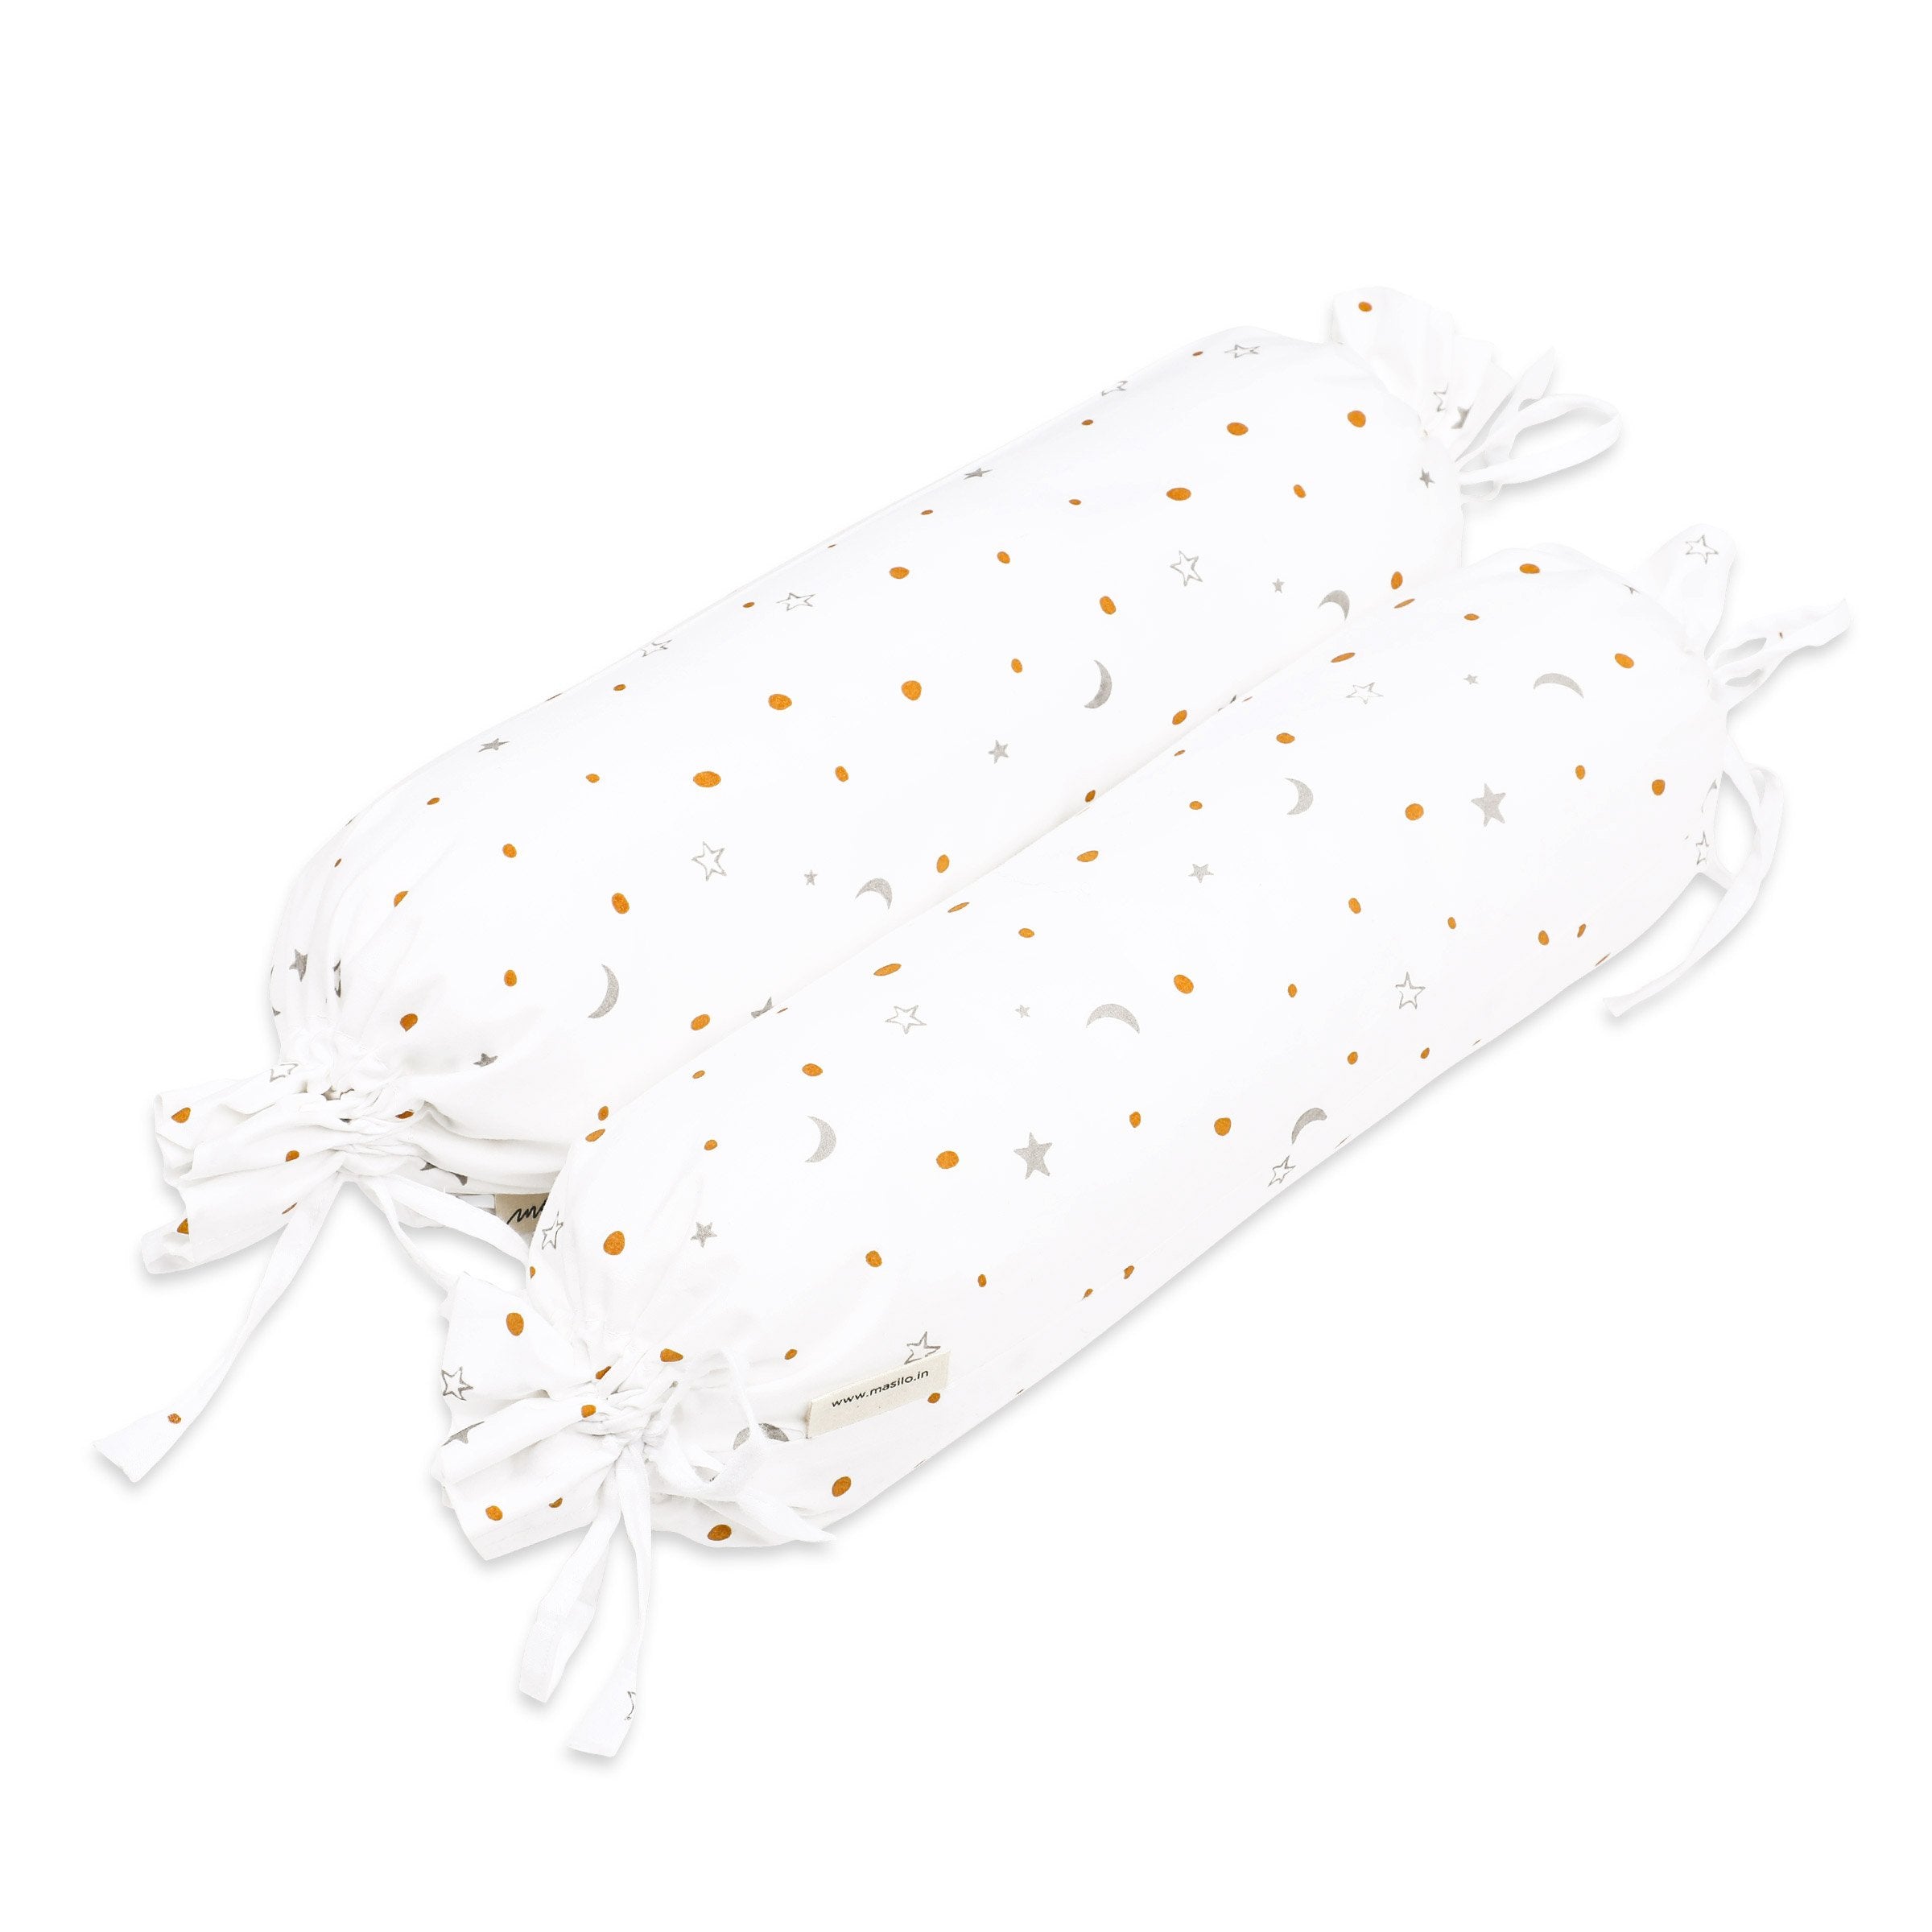 Masilo Organic Cotton Cot Bedding Set – Starry Night (Cream)